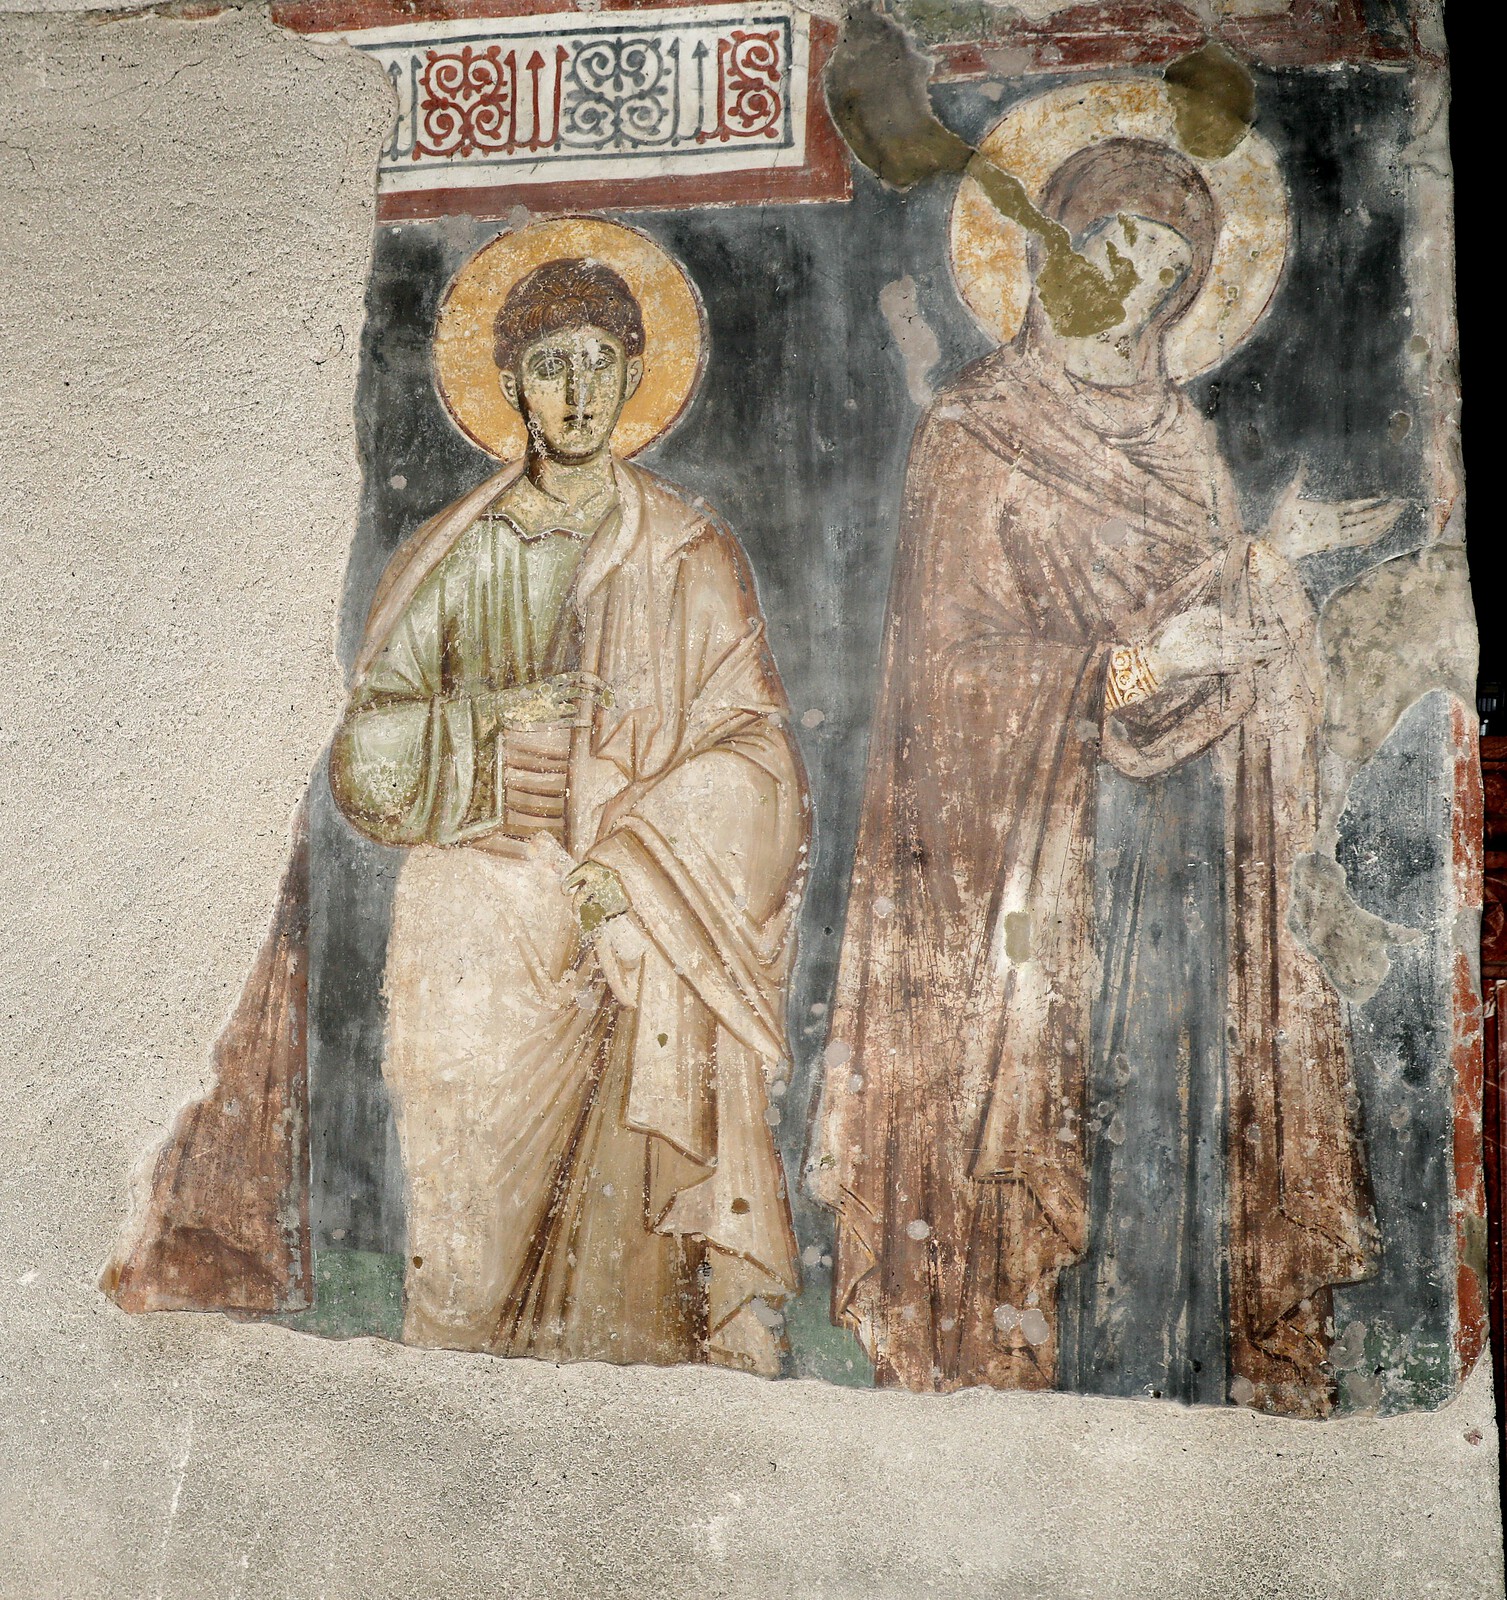 St. Stephen the Protomartyr and Holy Virgin Mediatrix